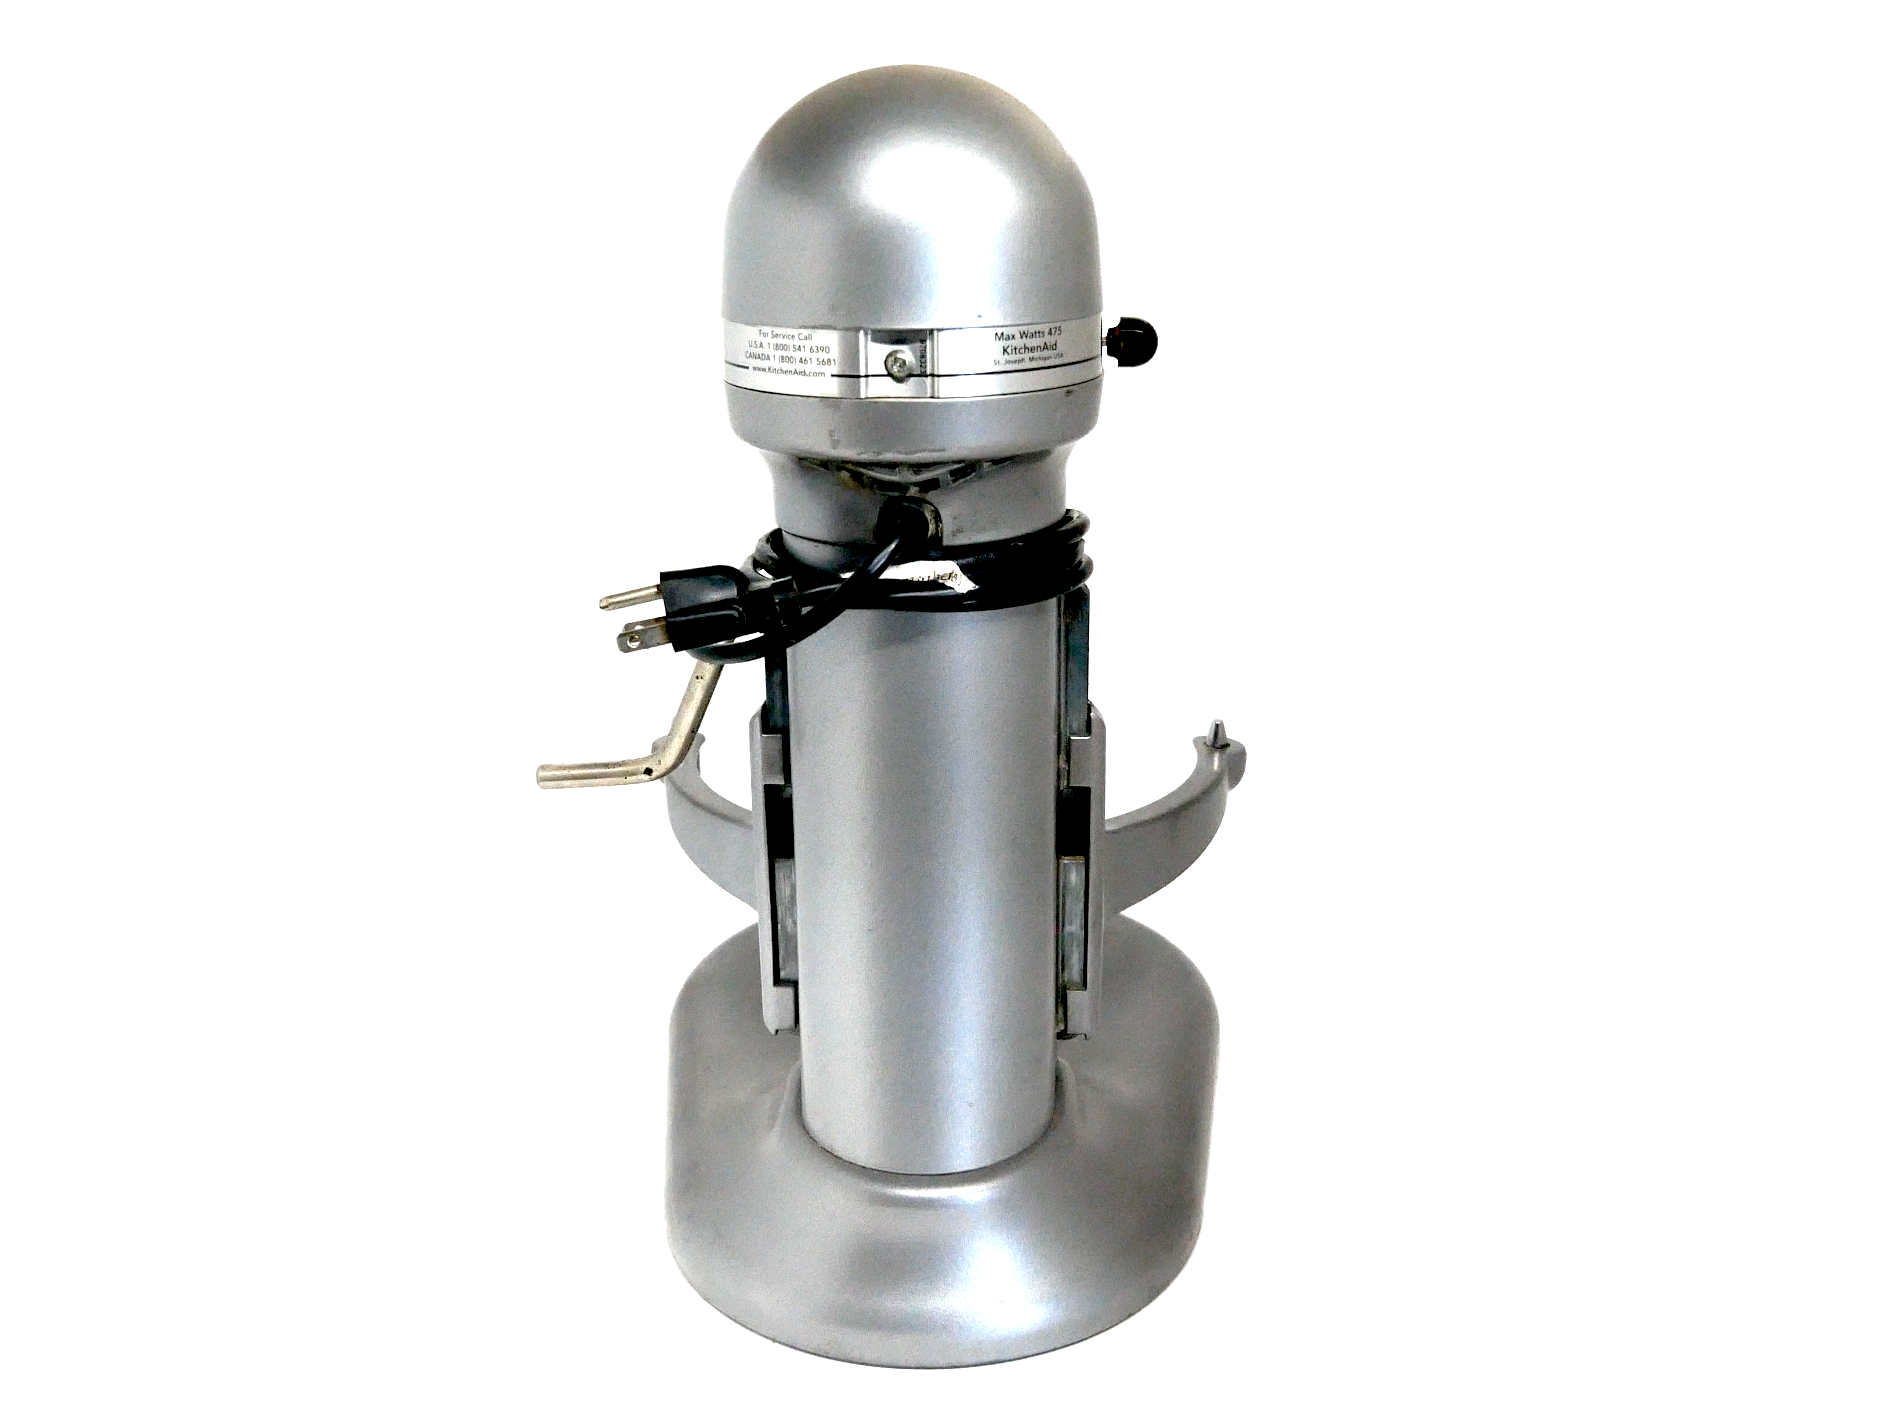 Kitchenaid Proline Ksm5 325 Watts Gray Matte Bowl-lift 5 Qt Stand Mixer for  Sale in Carrollton, TX - OfferUp